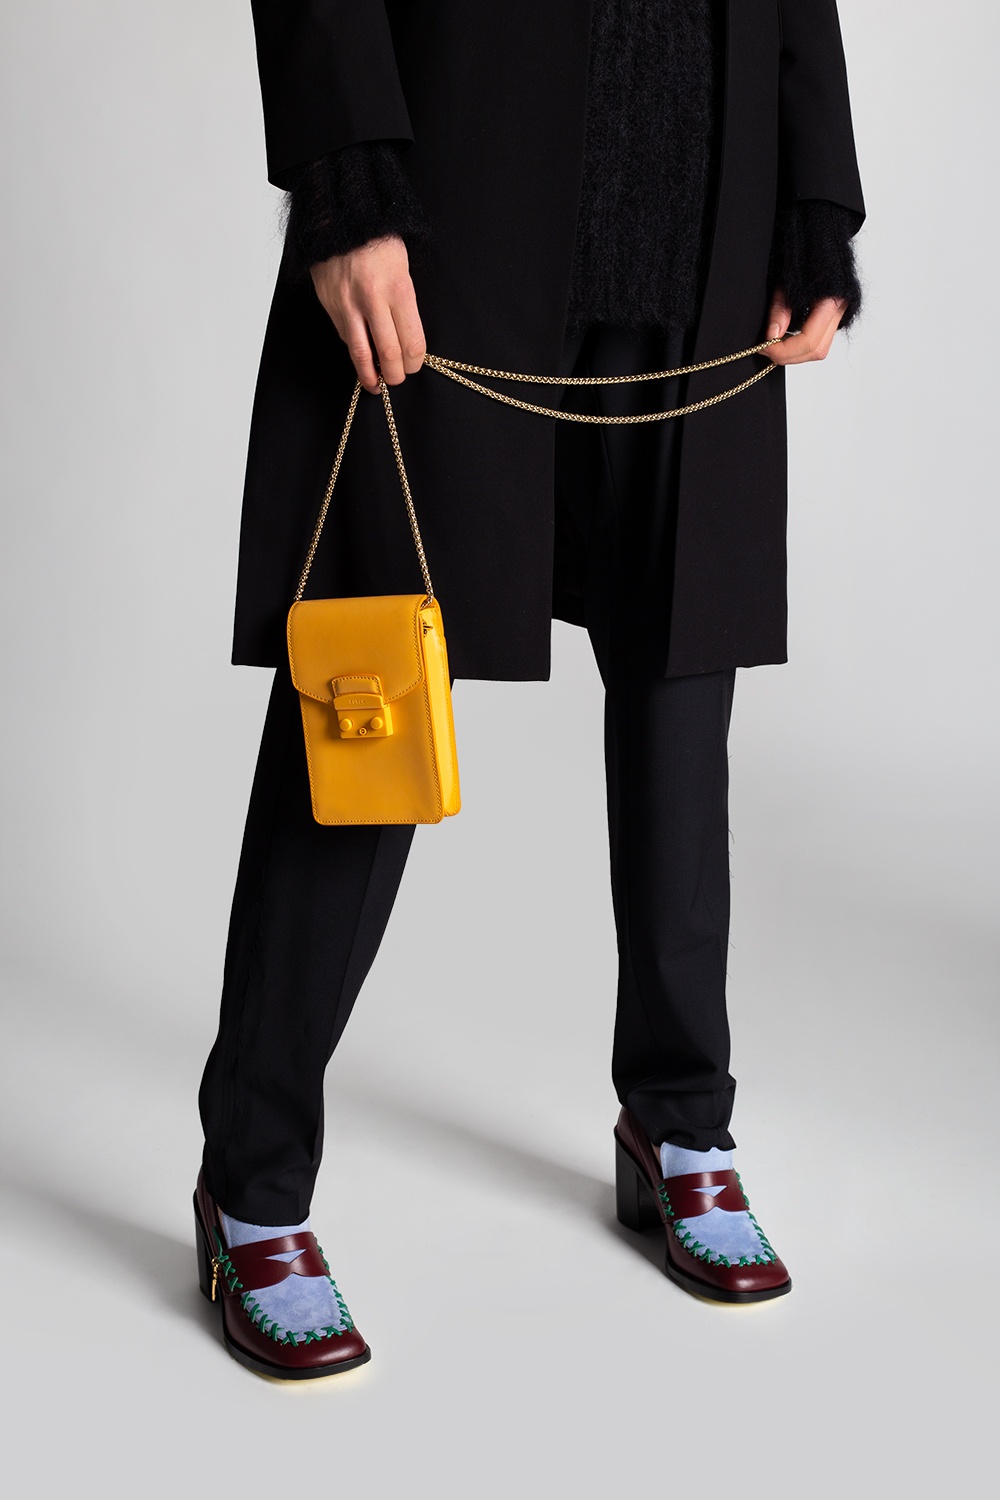 You're welcome Correlate spouse IetpShops | Furla 'Metropolis' shoulder bag | Women's Bags sander | Tasche  floral tote bag Arancione